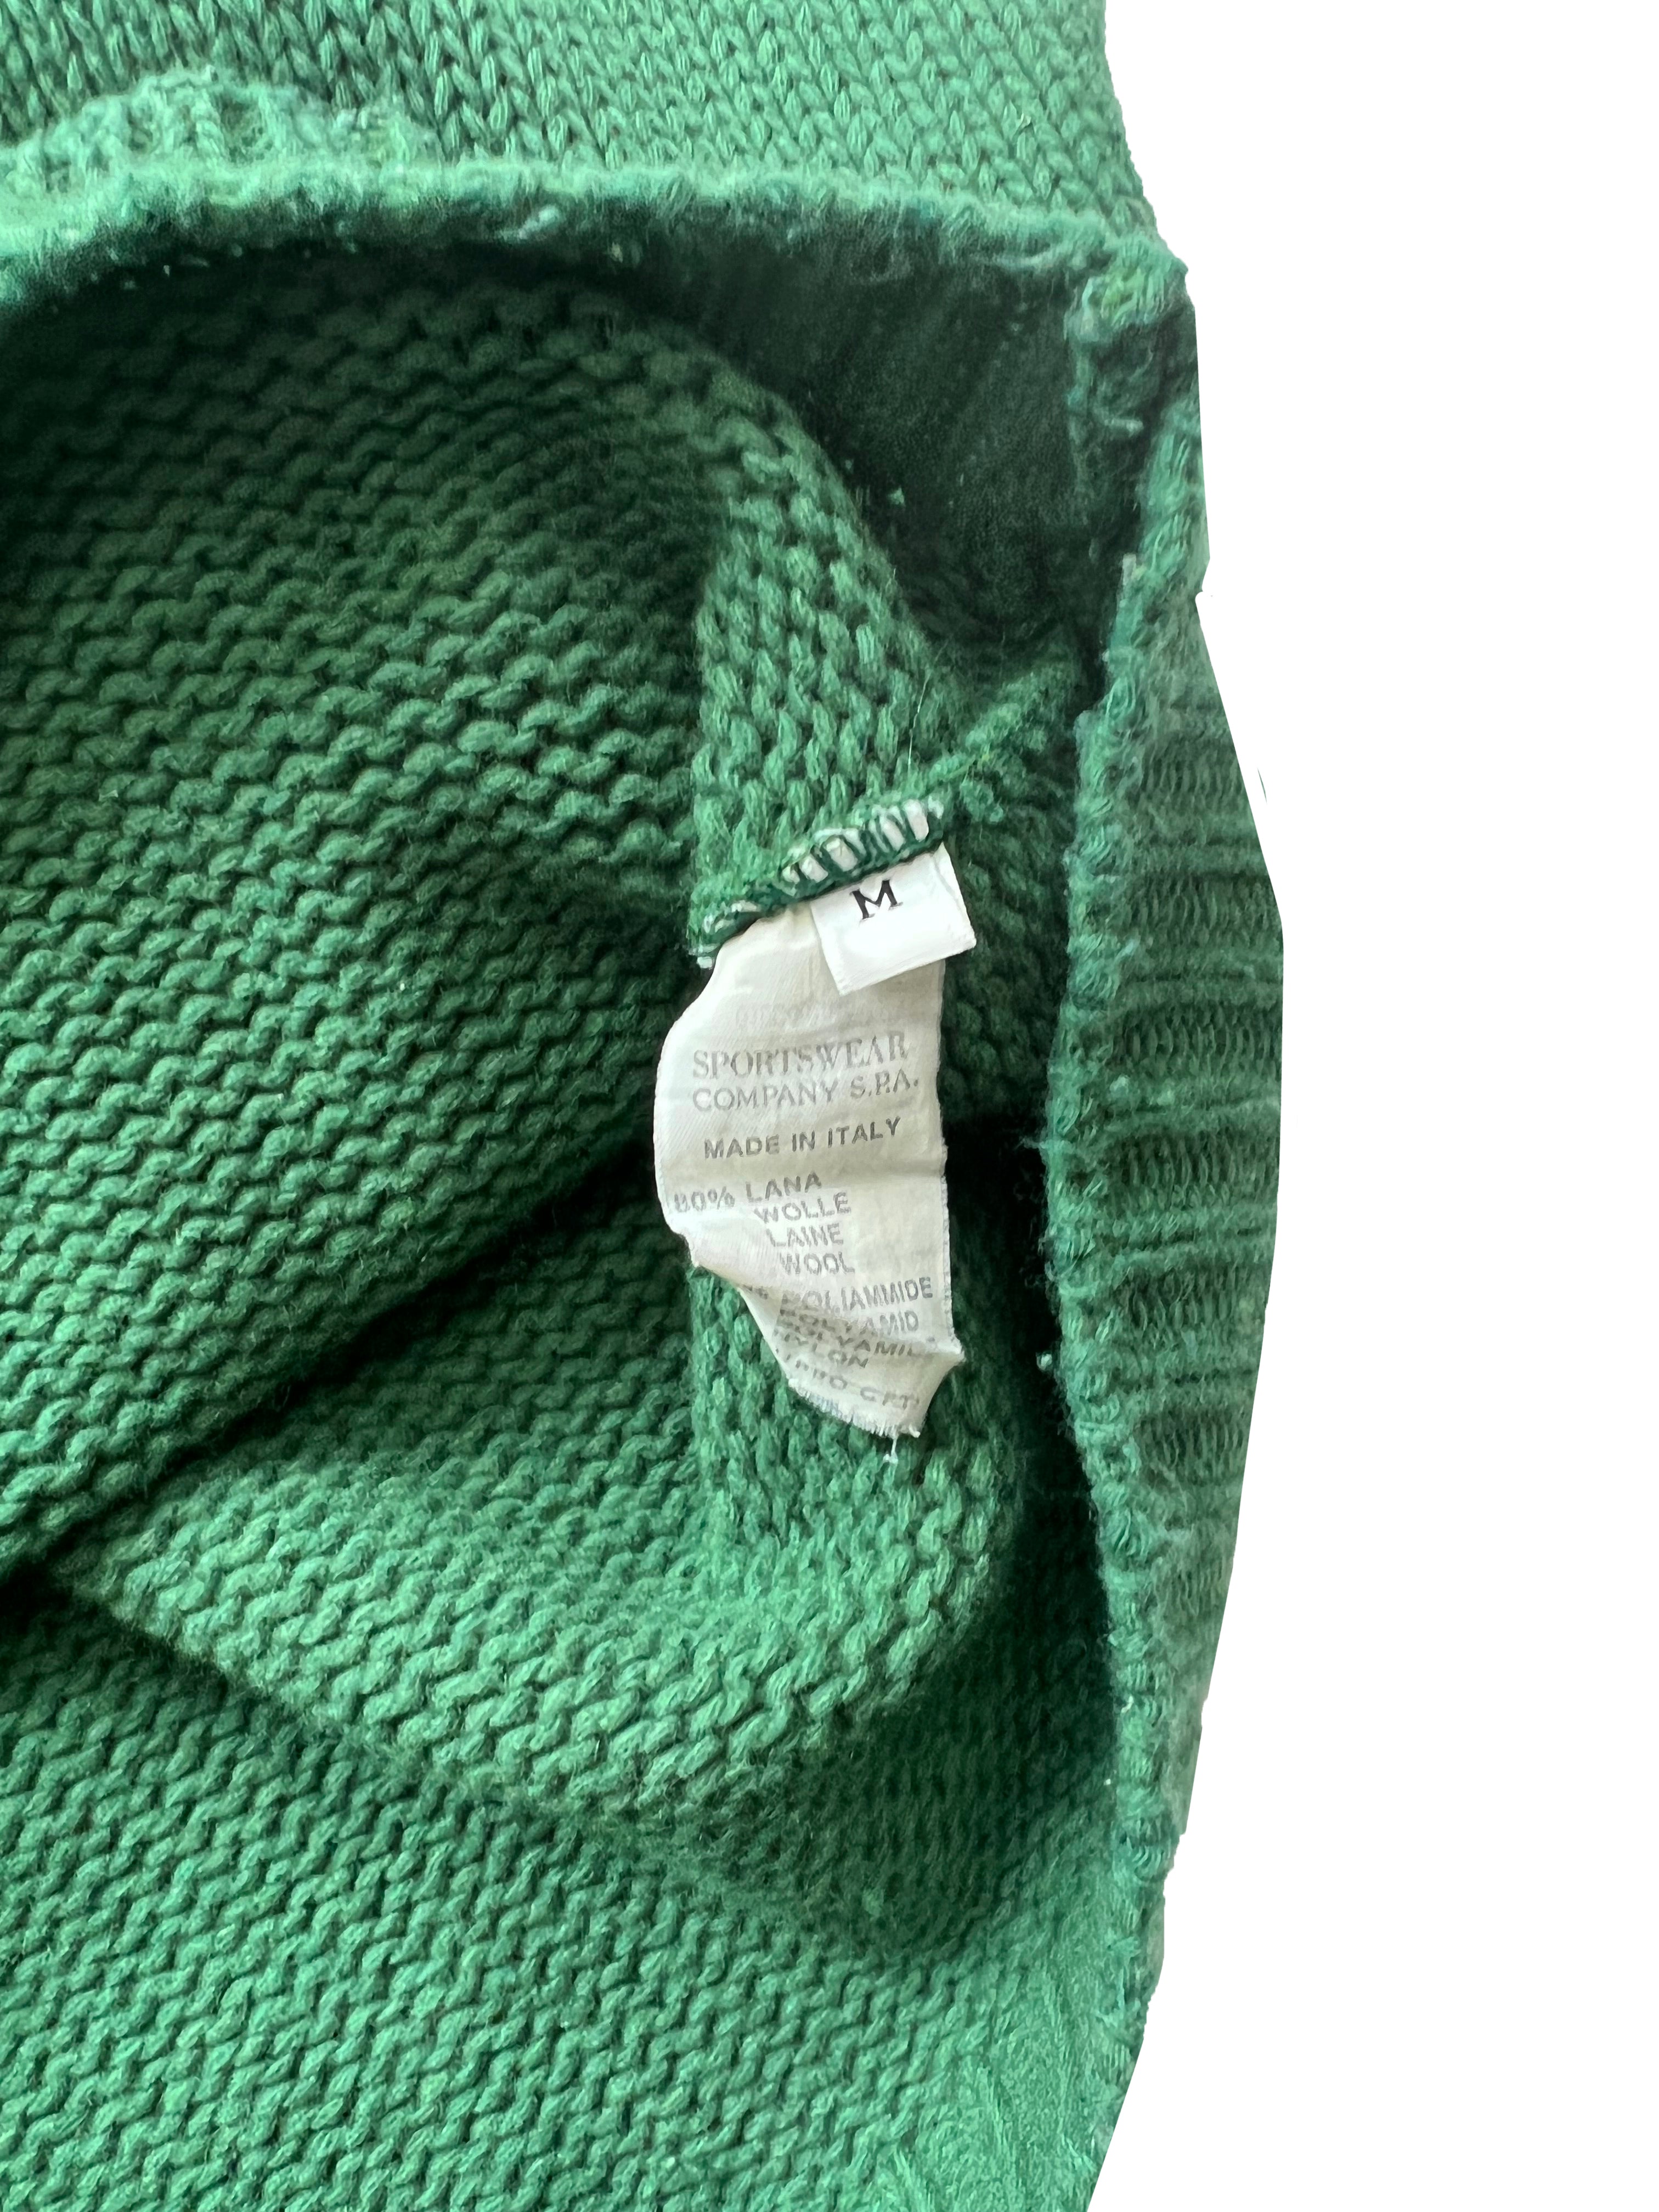 Stone island Green Wool Knit A/W 1991